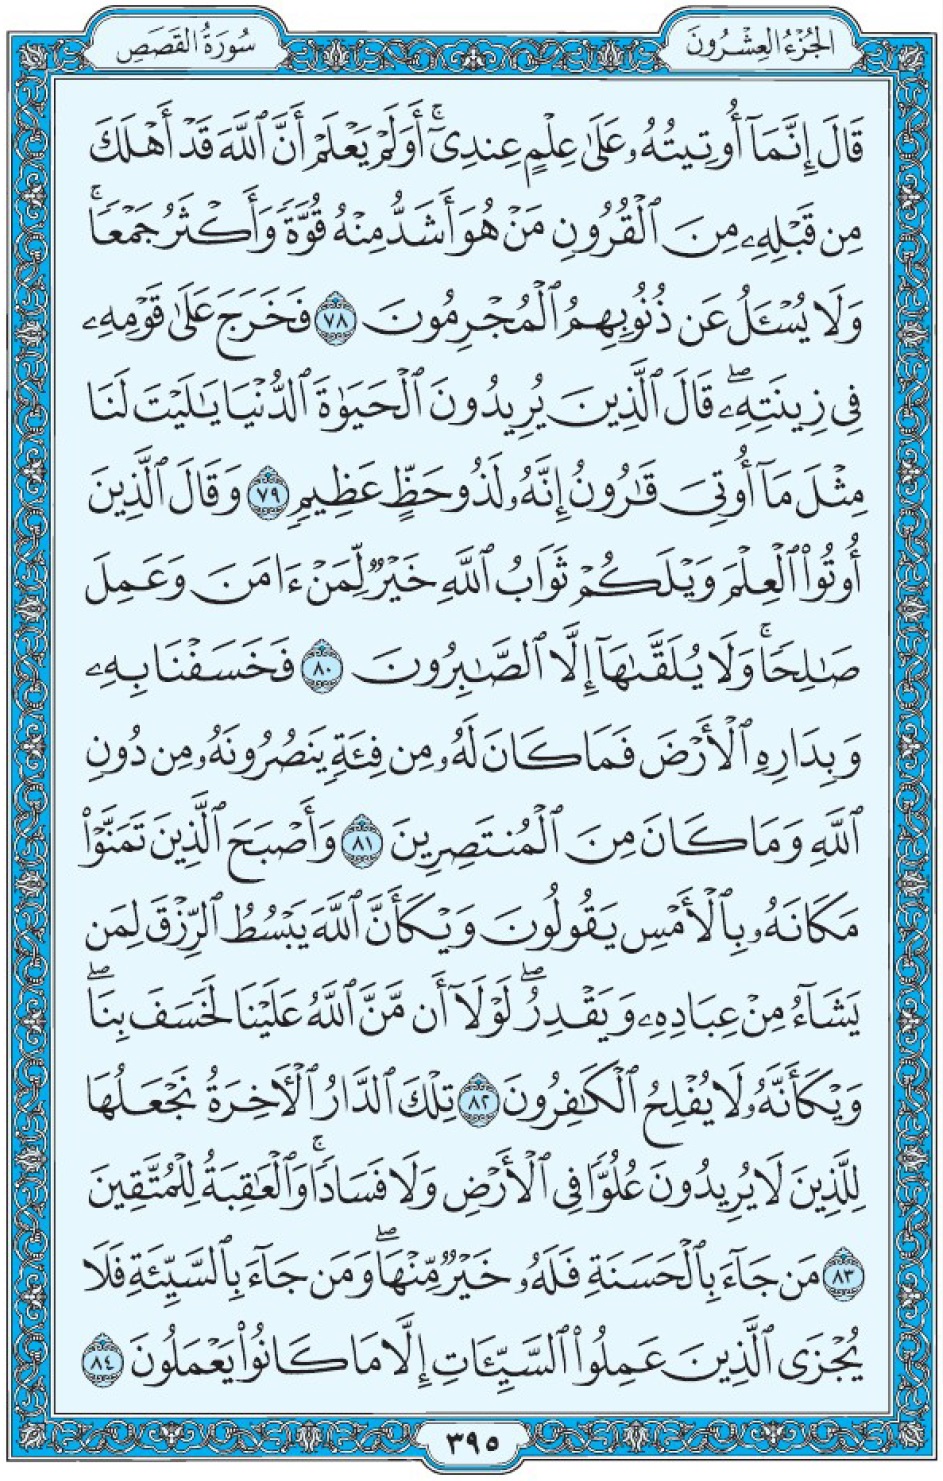 Коран Мединский мусхаф страница 395, Аль-Касас, аят 78-84